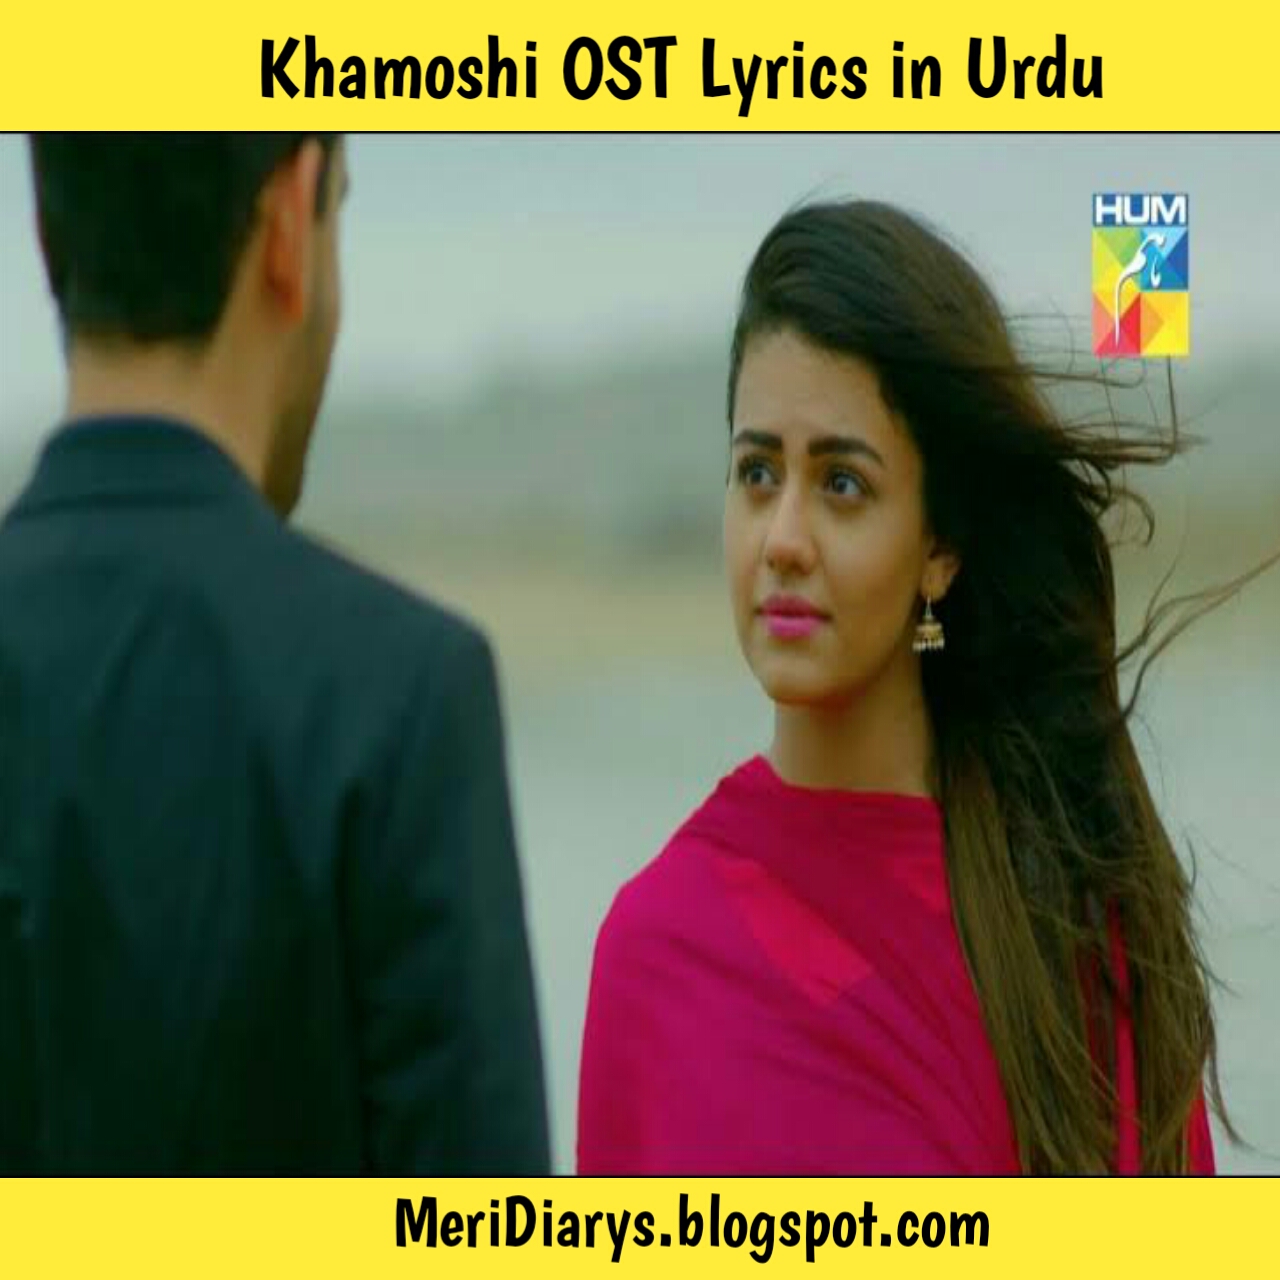 Khamoshi OST lyrics in Urdu sung by Bilal Khan and Schumaila Hussain